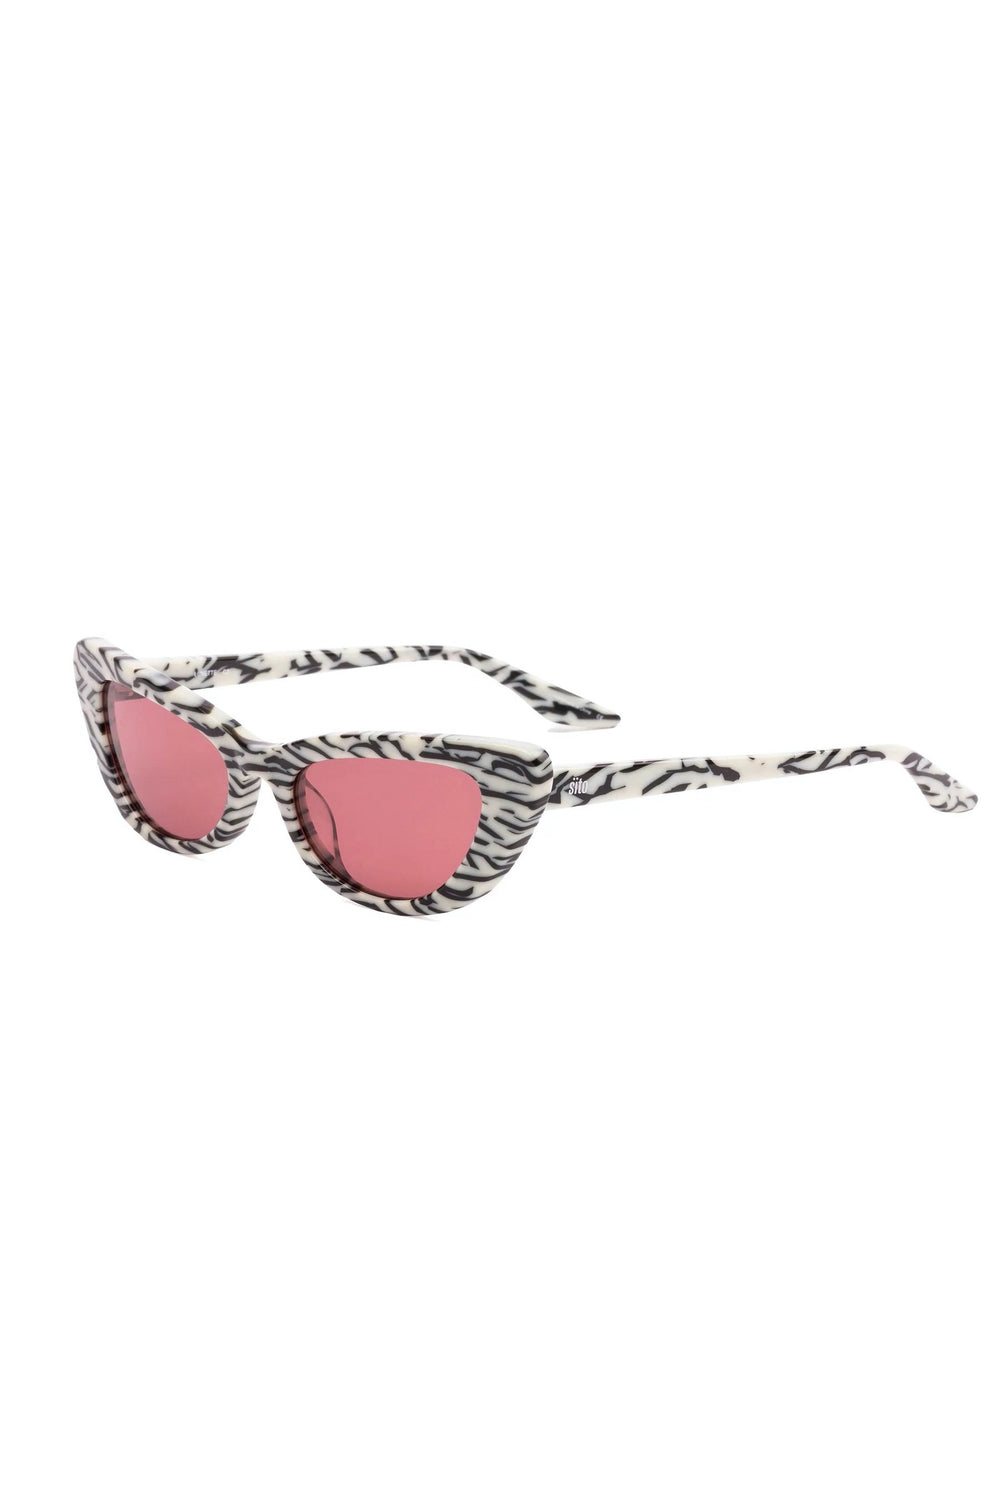 Savannah Lunette Sunglasses